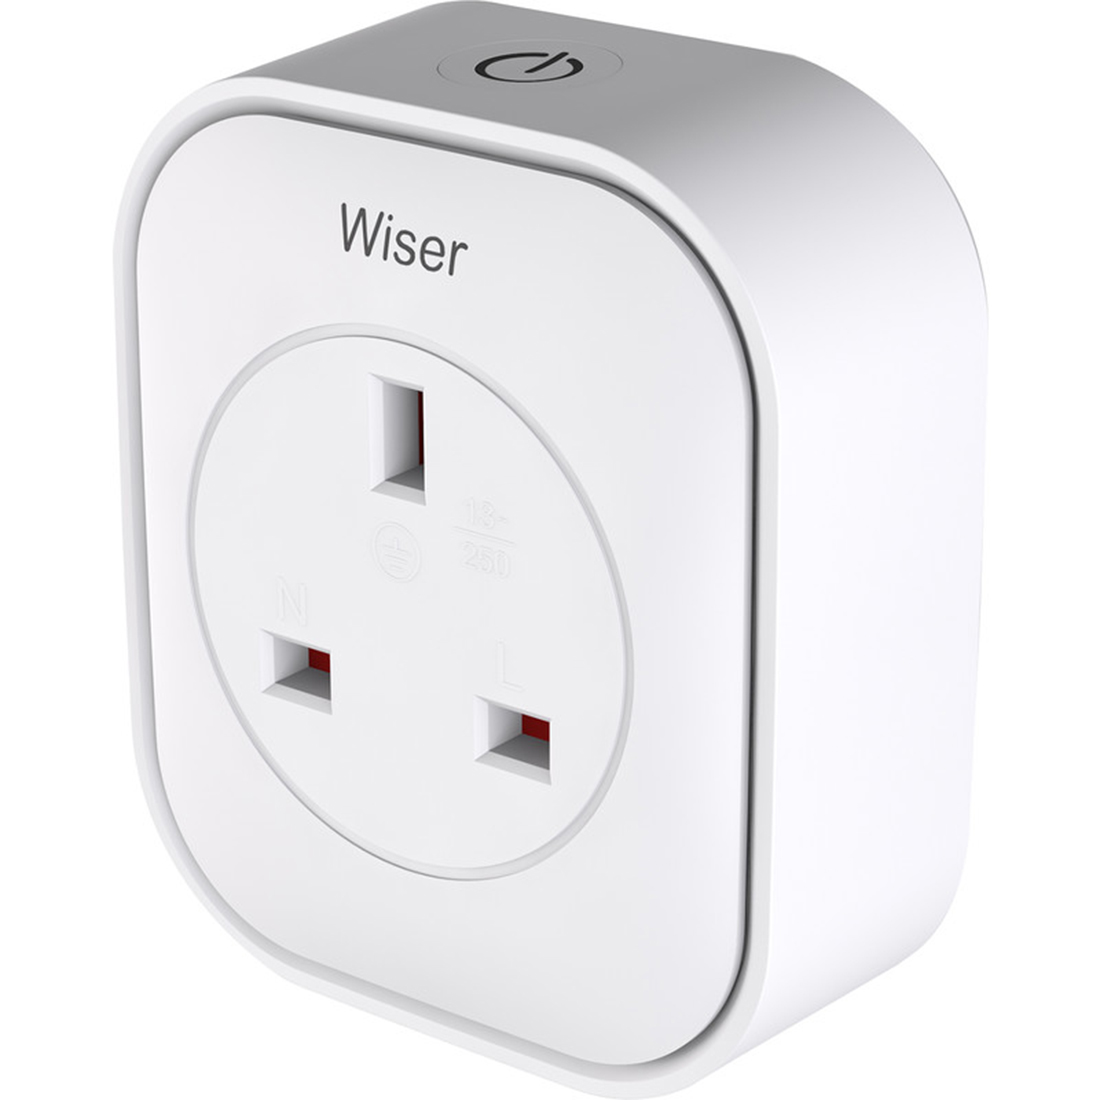 Drayton Wiser Smart Plug